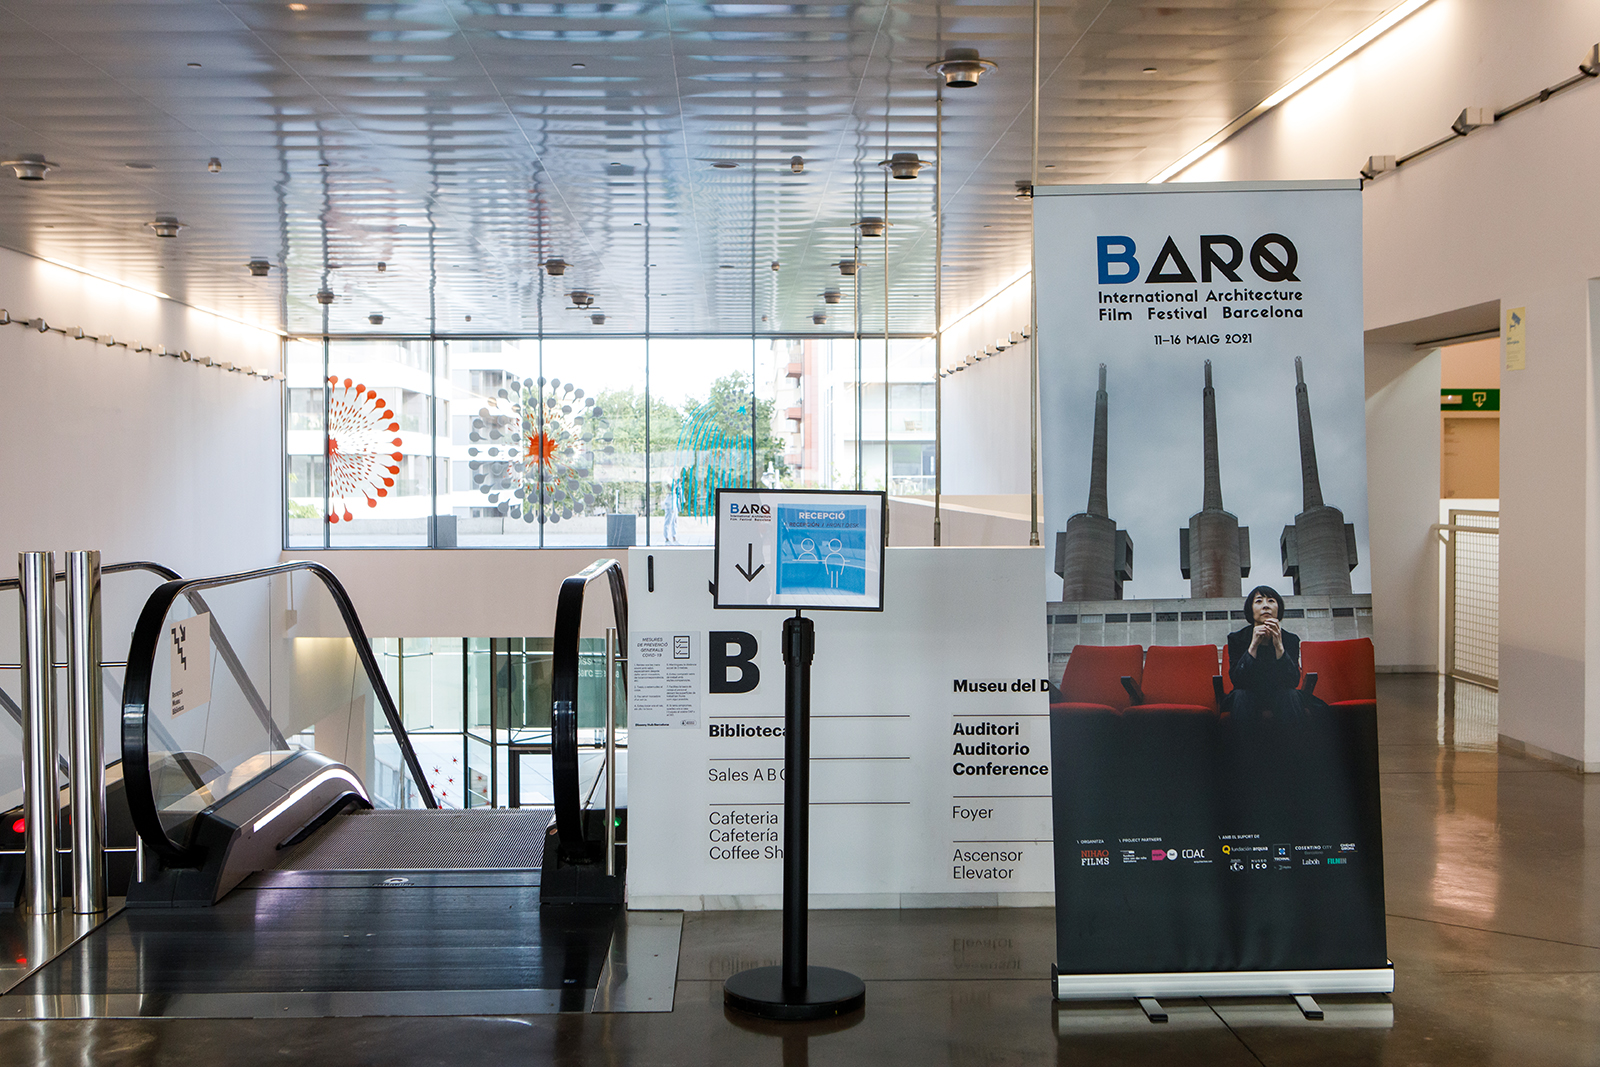 BARQ International Architecture Film Festival Barcelona al DHUB